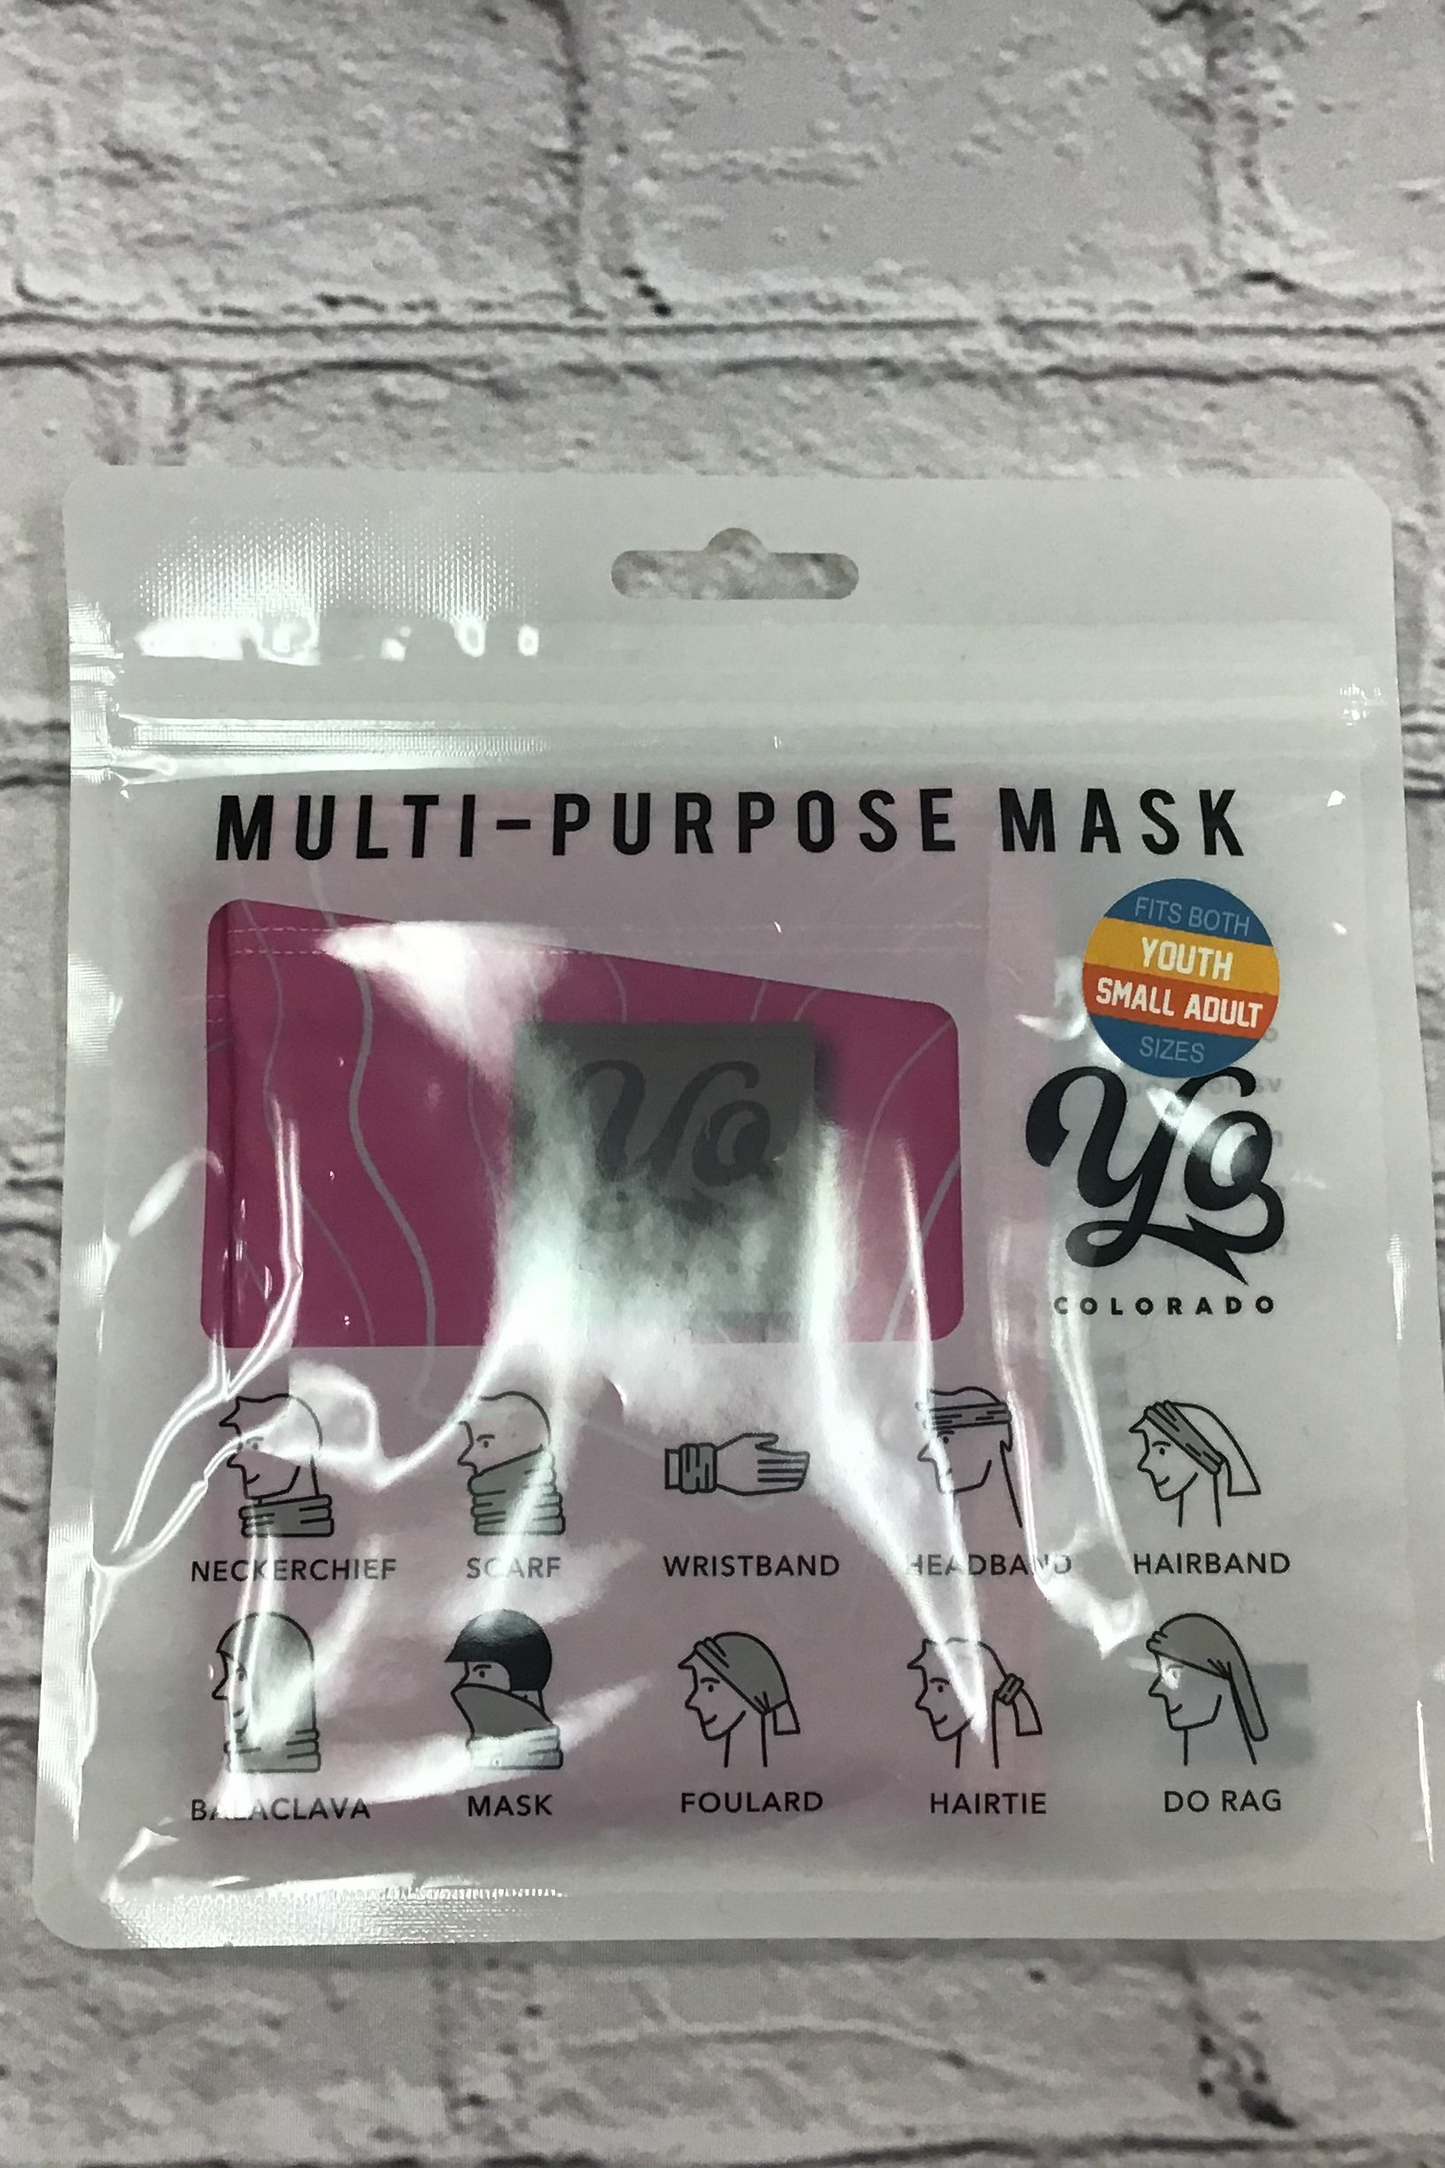 Yo Colorado Multi-Purpose Mask.